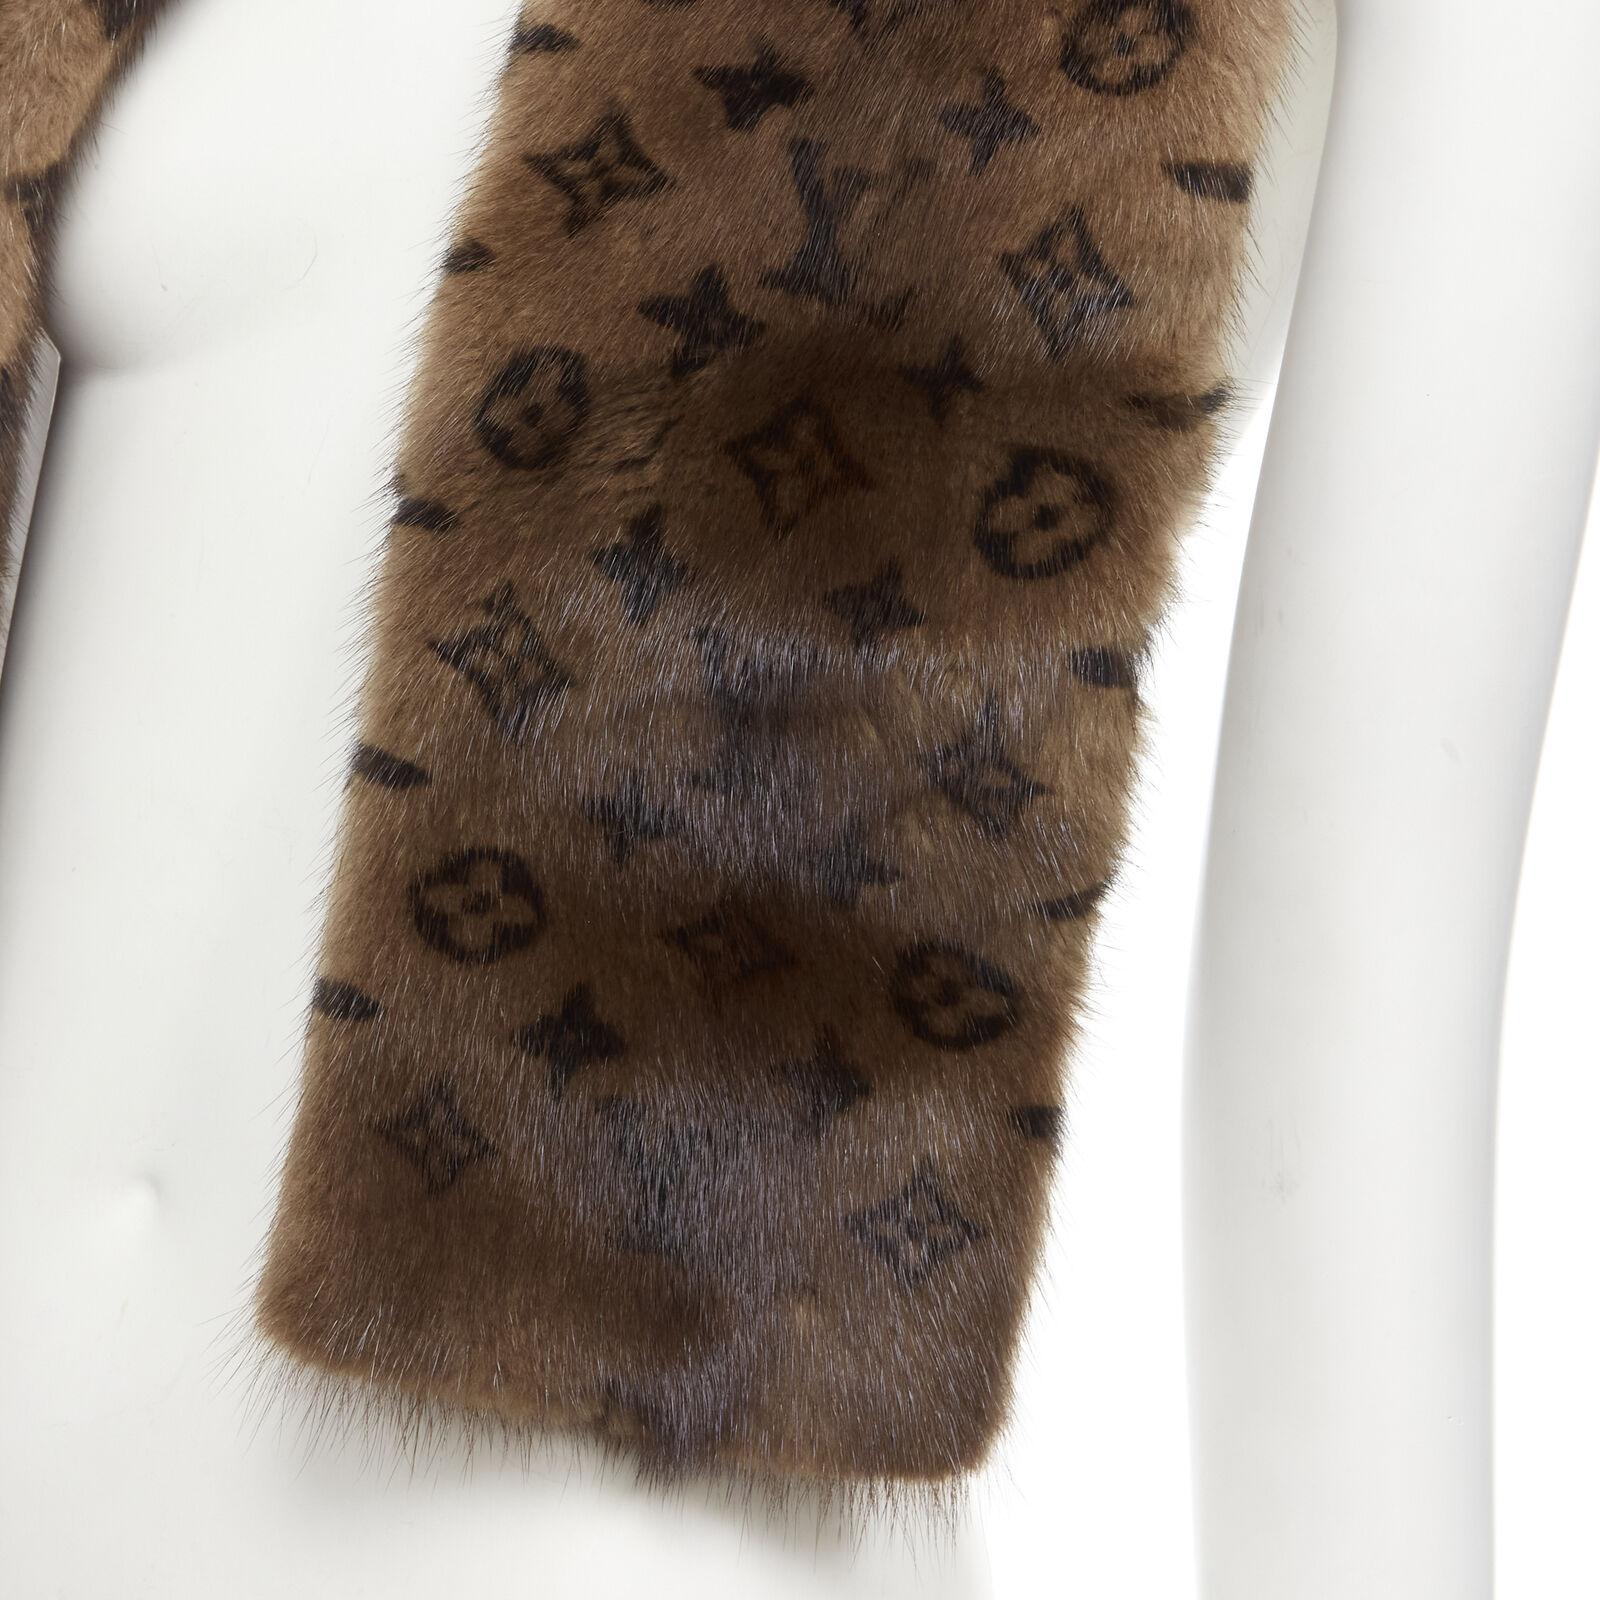 Louis Vuitton Classic Monogram Mink fur Scarf Stole with Box